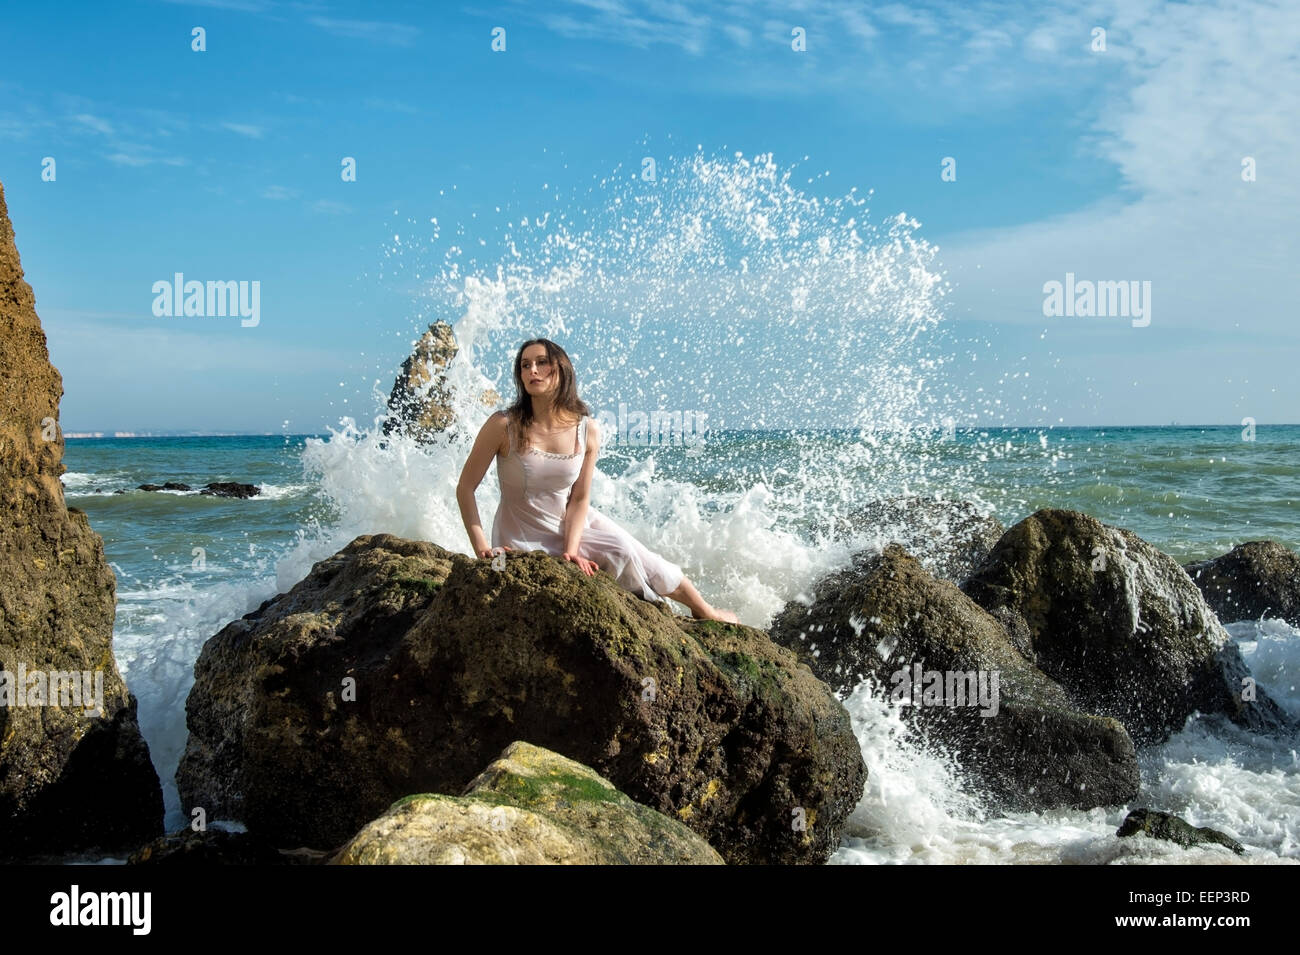 woman lying posing on a rock with crashing waves Stock Photo